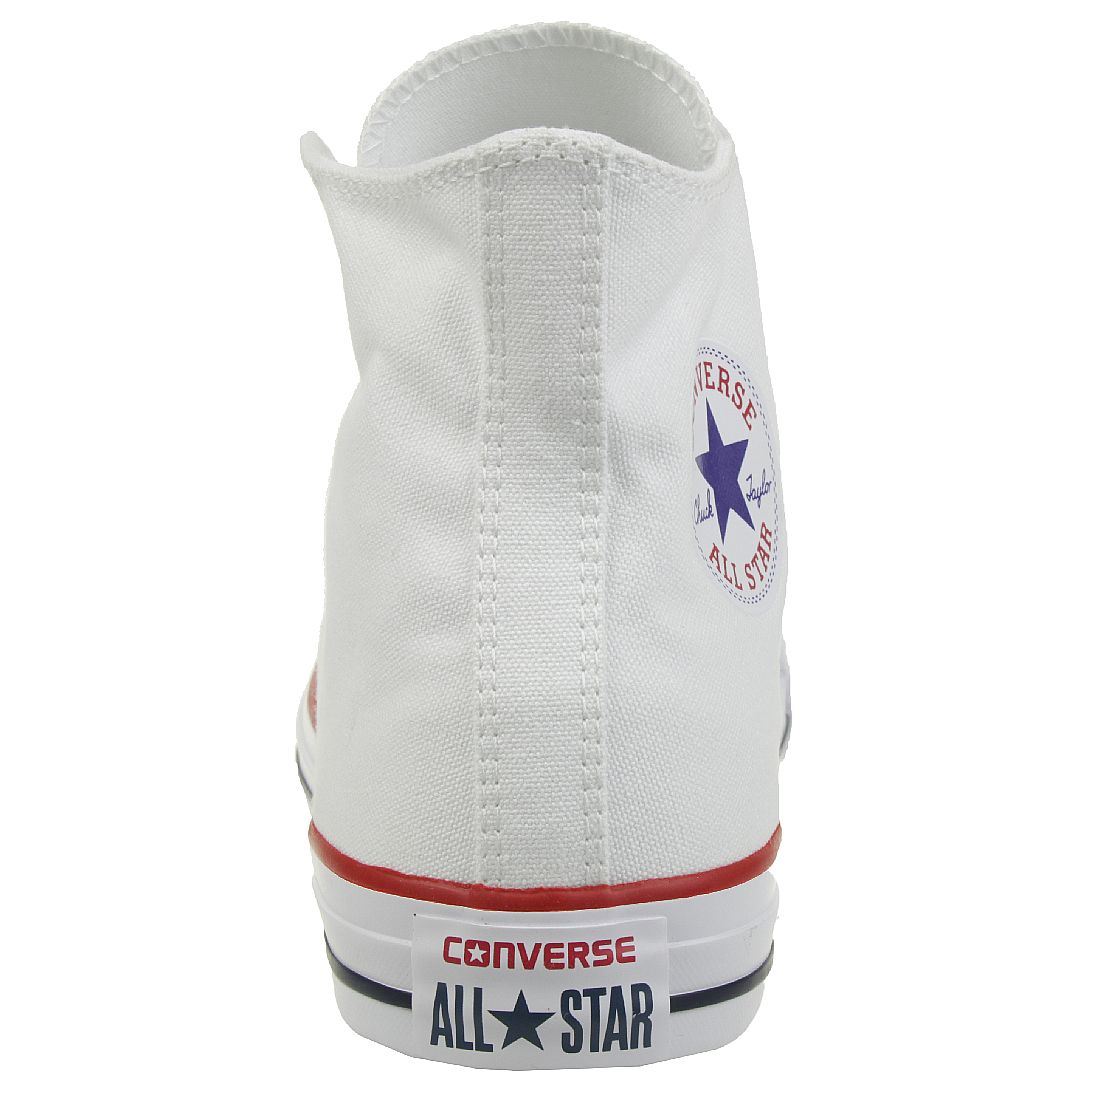 Converse C Taylor All Star HI Chuck Schuhe Sneaker canvas Optical White M7650C